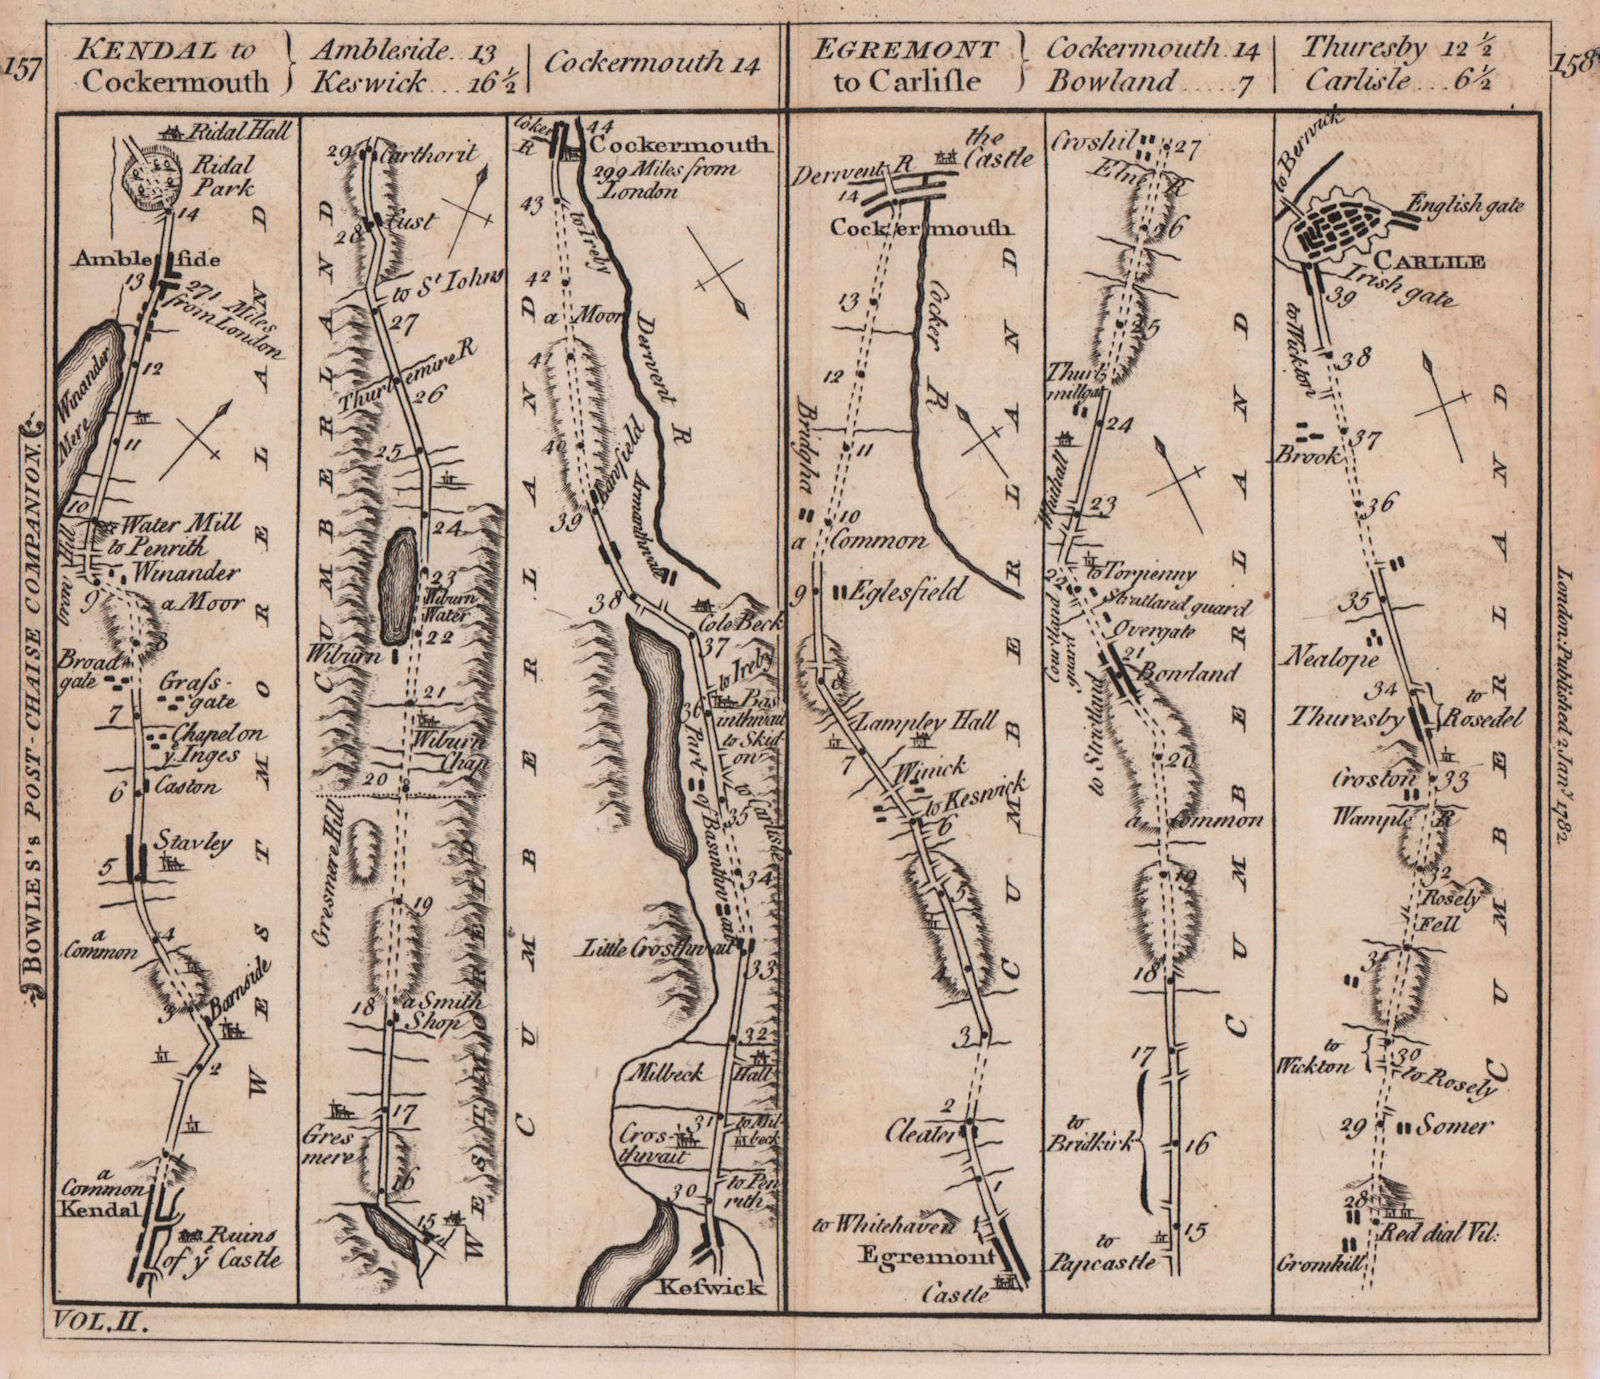 Kendal-Ambleside-Cockermouth. Egremont-Carlisle road strip map. BOWLES 1782